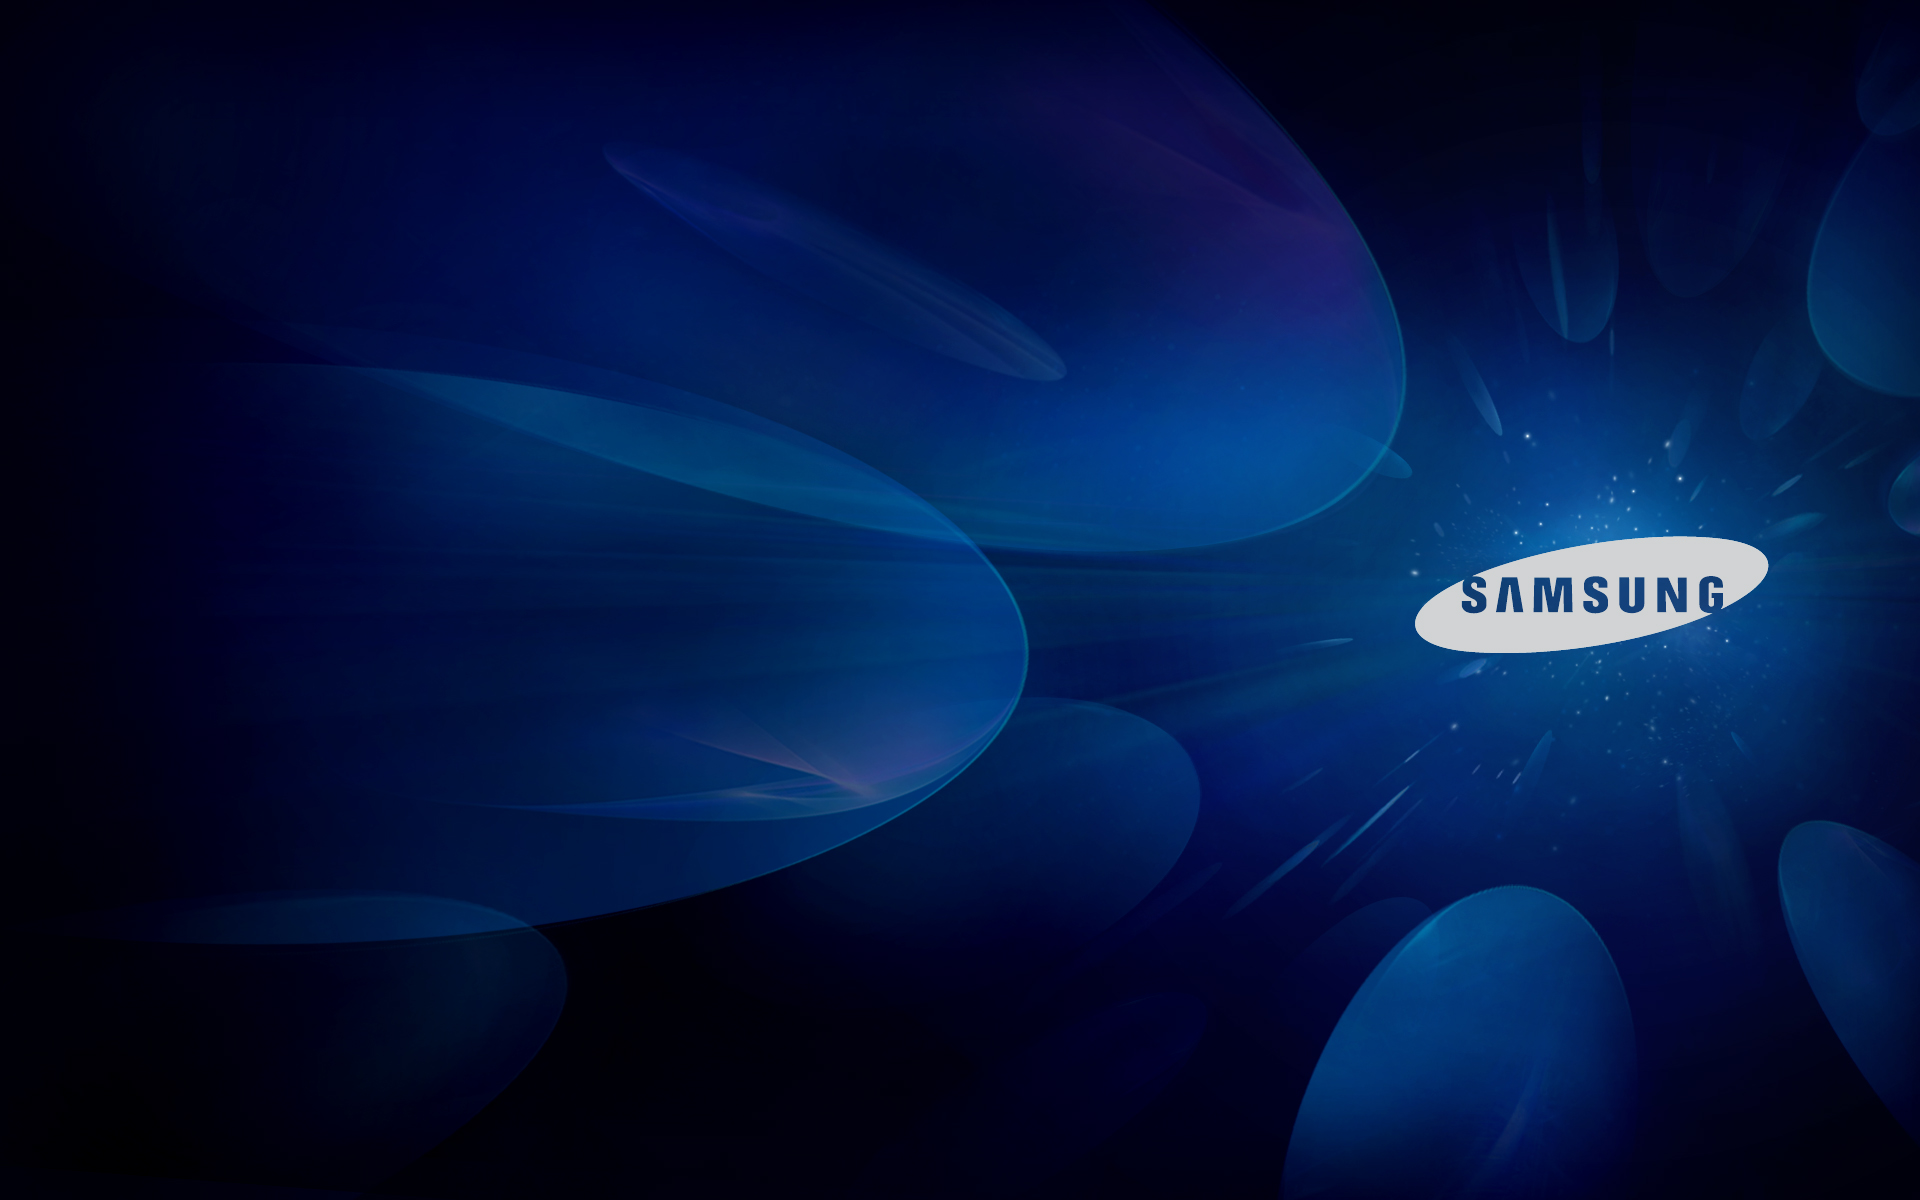  Samsung  Logo Wallpapers  PixelsTalk Net